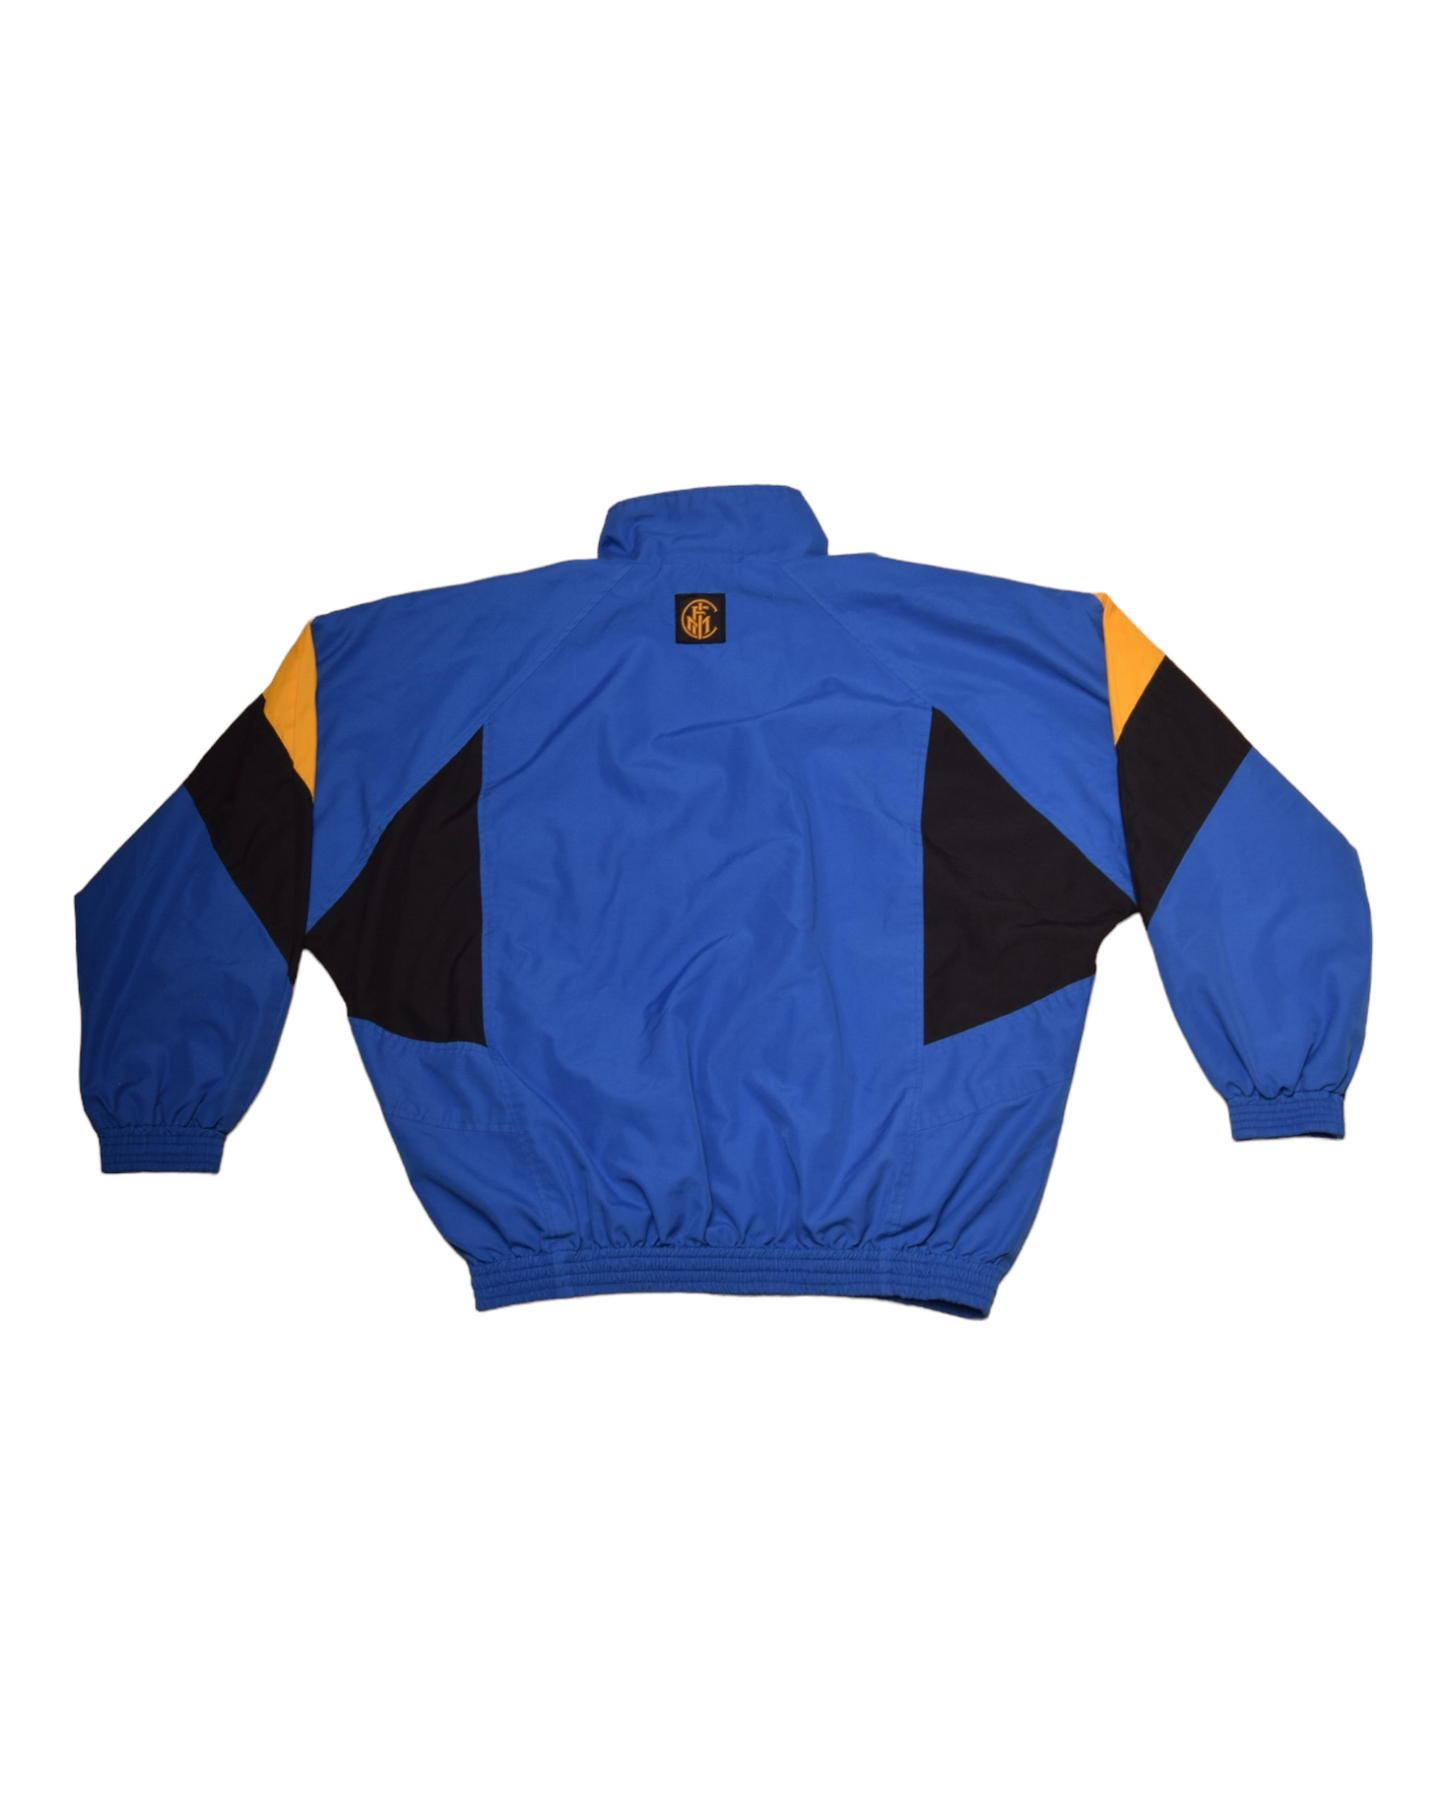 Internazionale Milano Umbro 1996 - 1997 Jacket Track Top Blue Black Yellow Size M